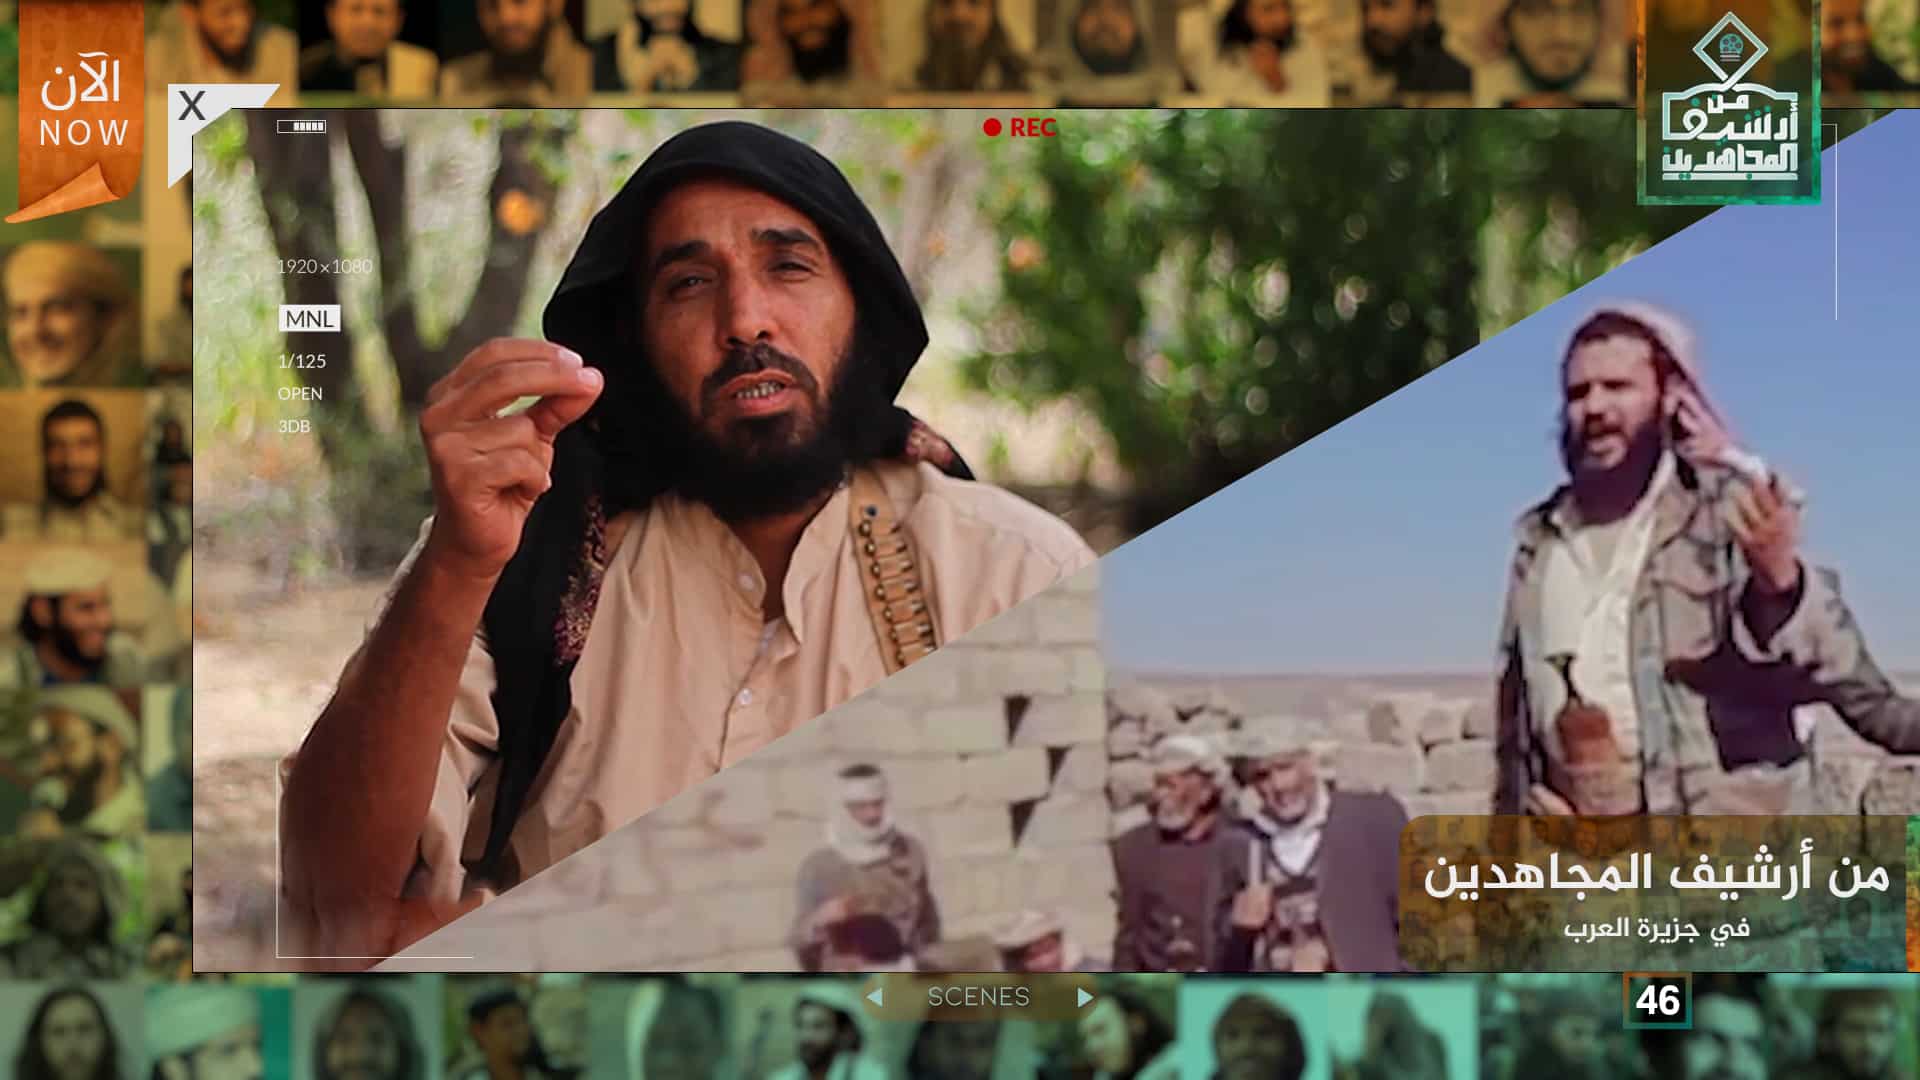 (Video) al-Malahim Media (al-Qaeda in the Arabian Peninsula / AQAP): From the Mujahideen's Archive in the Arabian Peninsula #46 - 24 May 2022